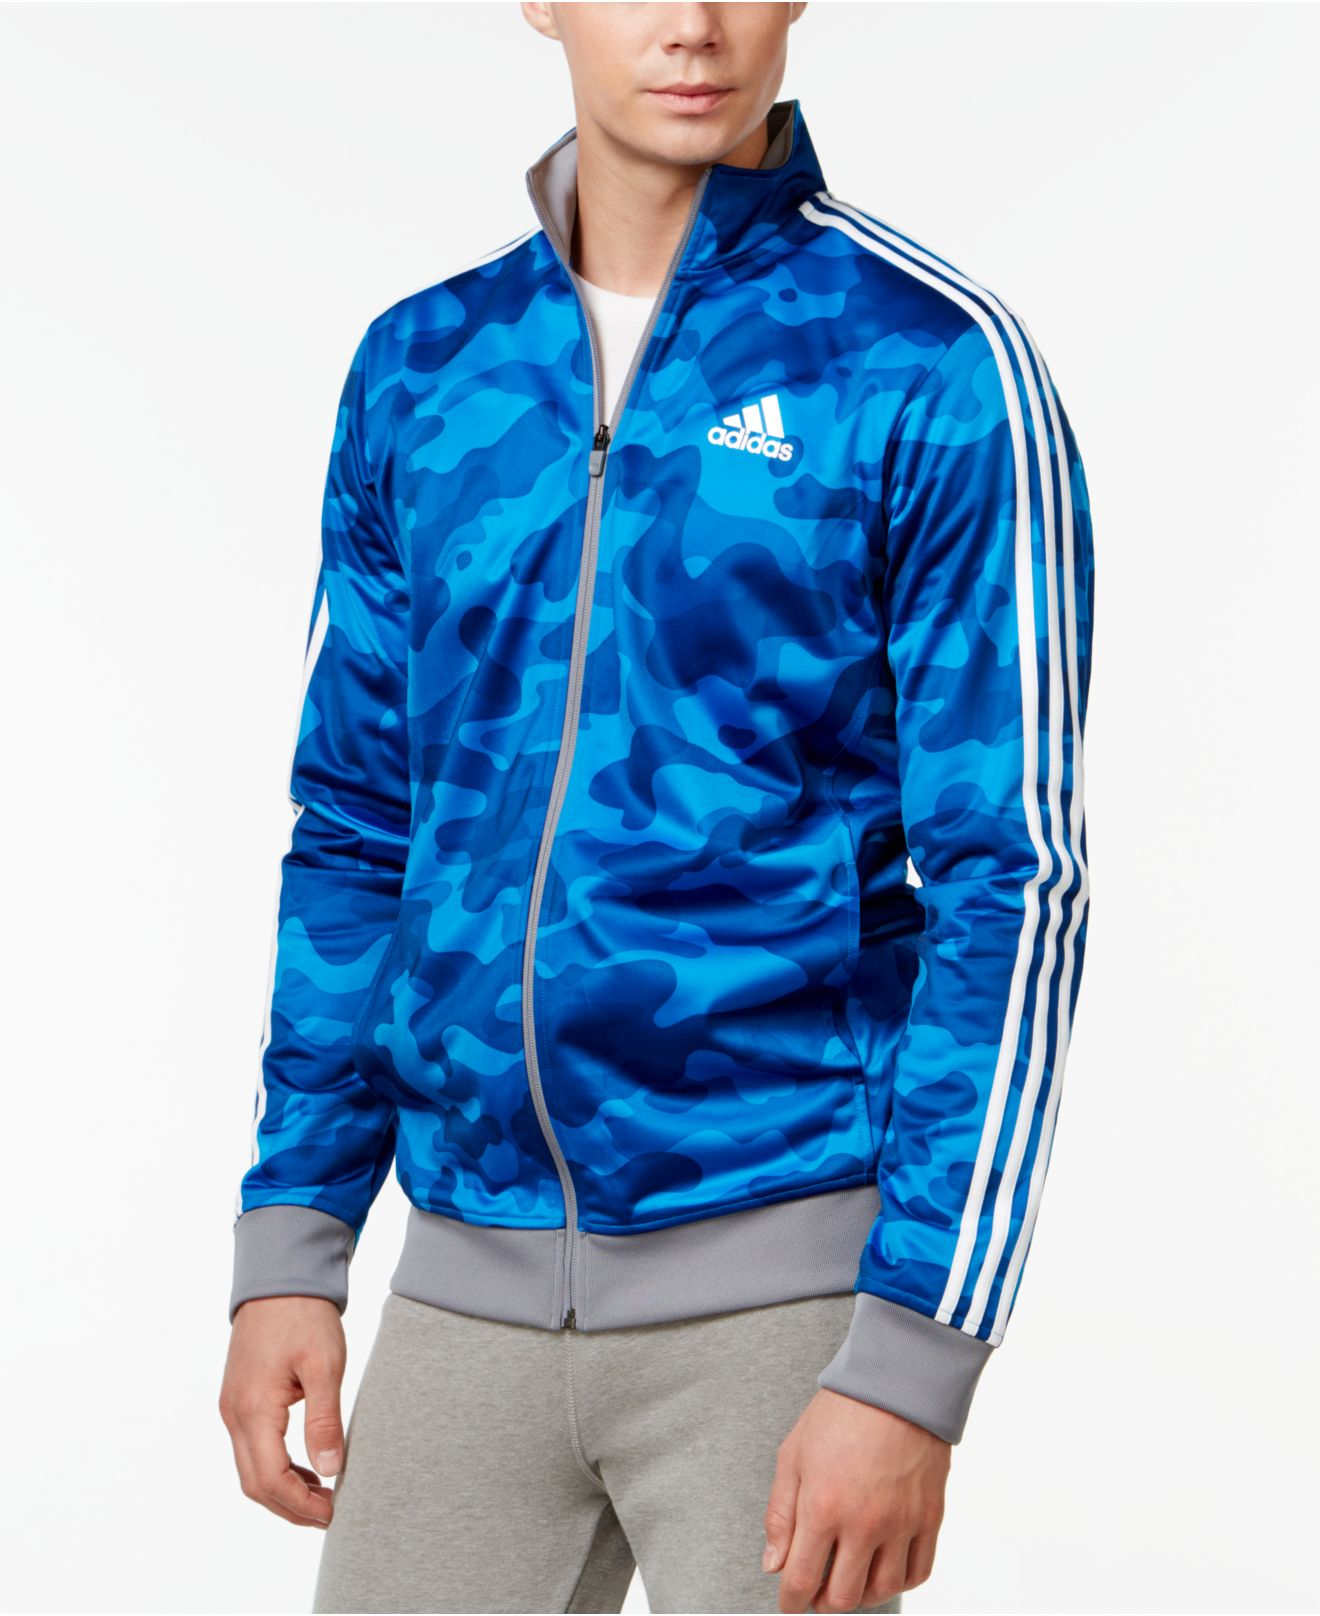 blue camo adidas jacket